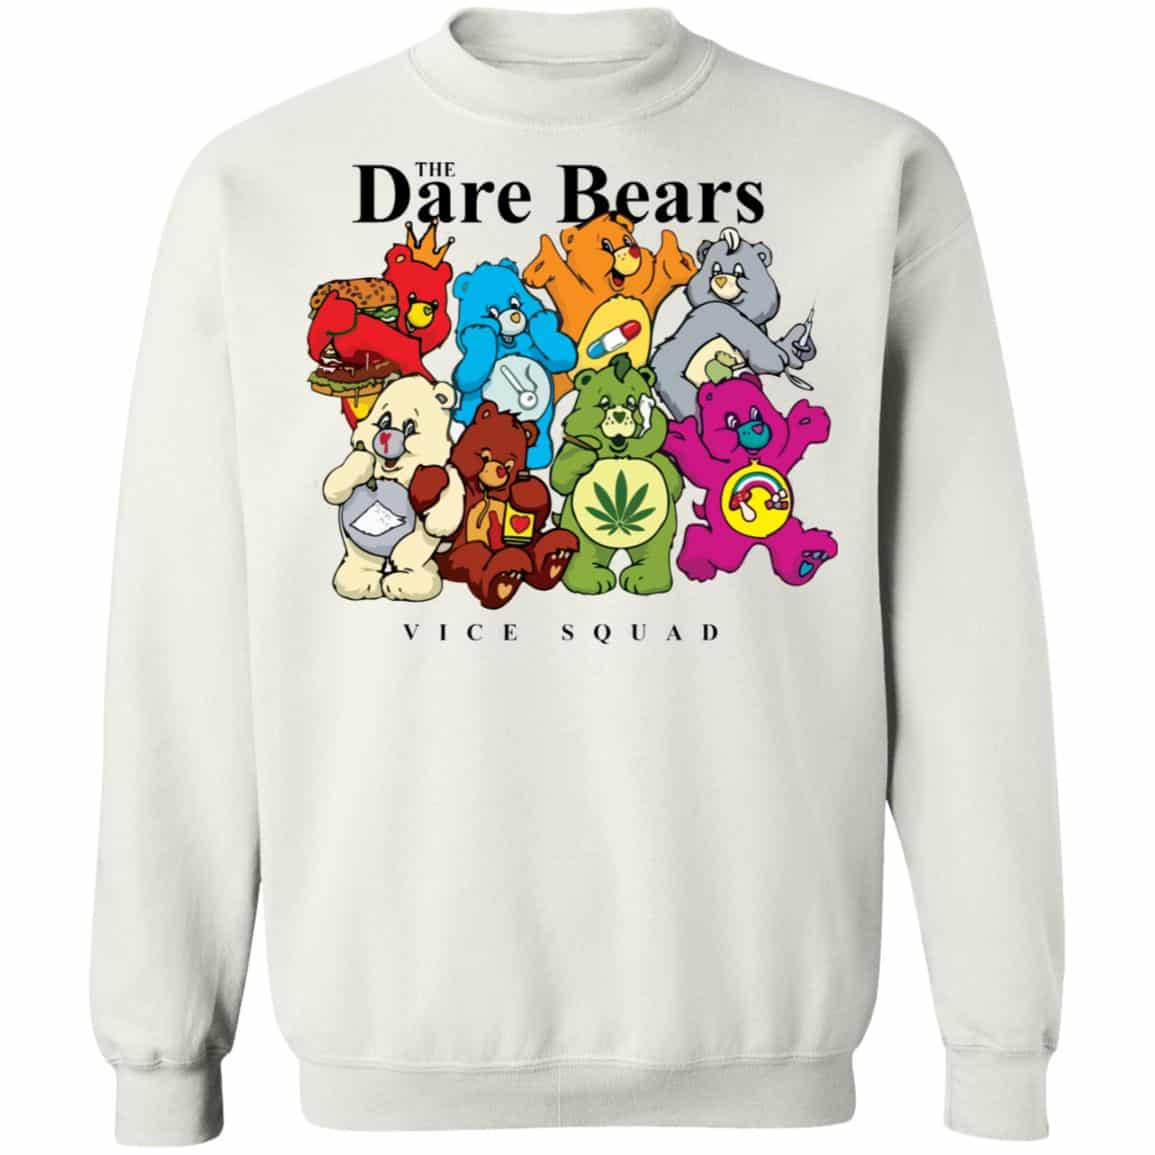 The Dare Bears Vice Squad Shirt 2